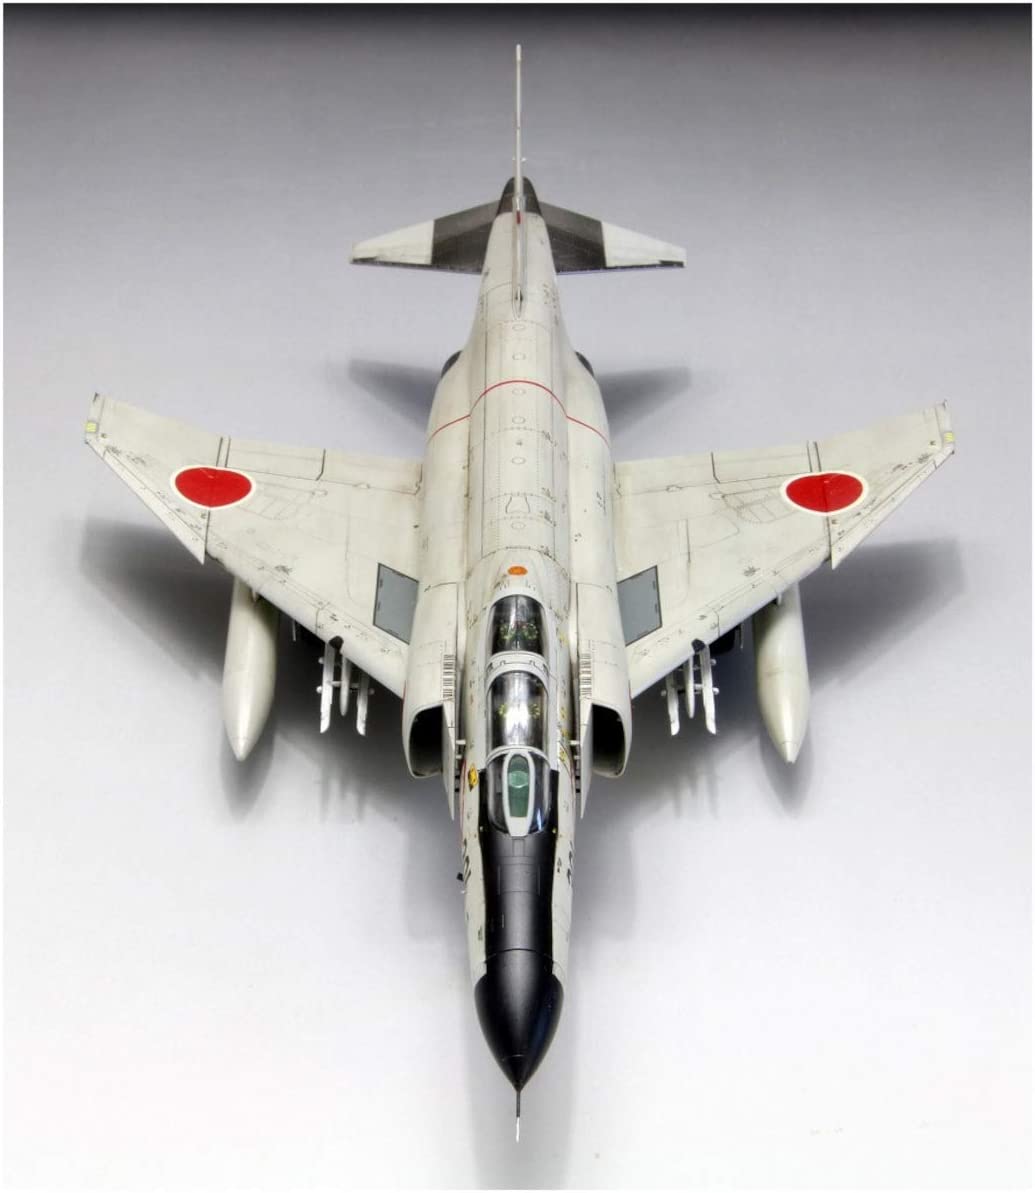 FP37 JASDF F-4EJ